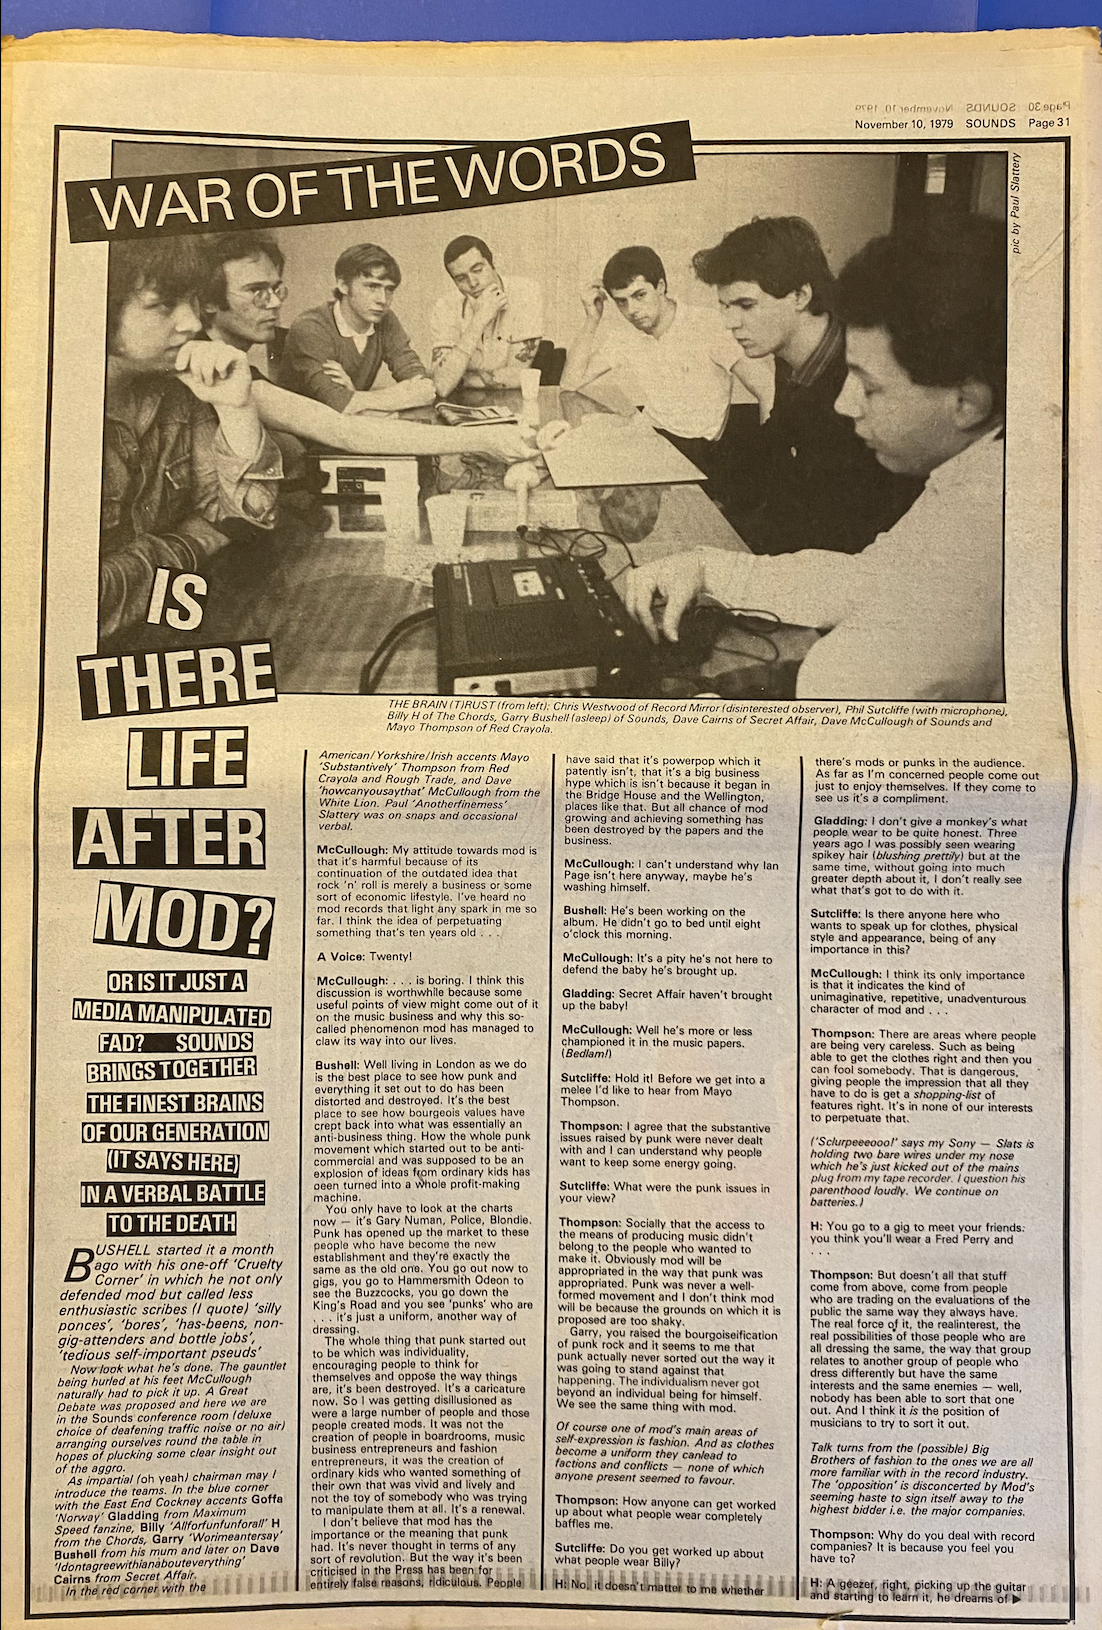 Mod Revival Sounds magazine November 1979